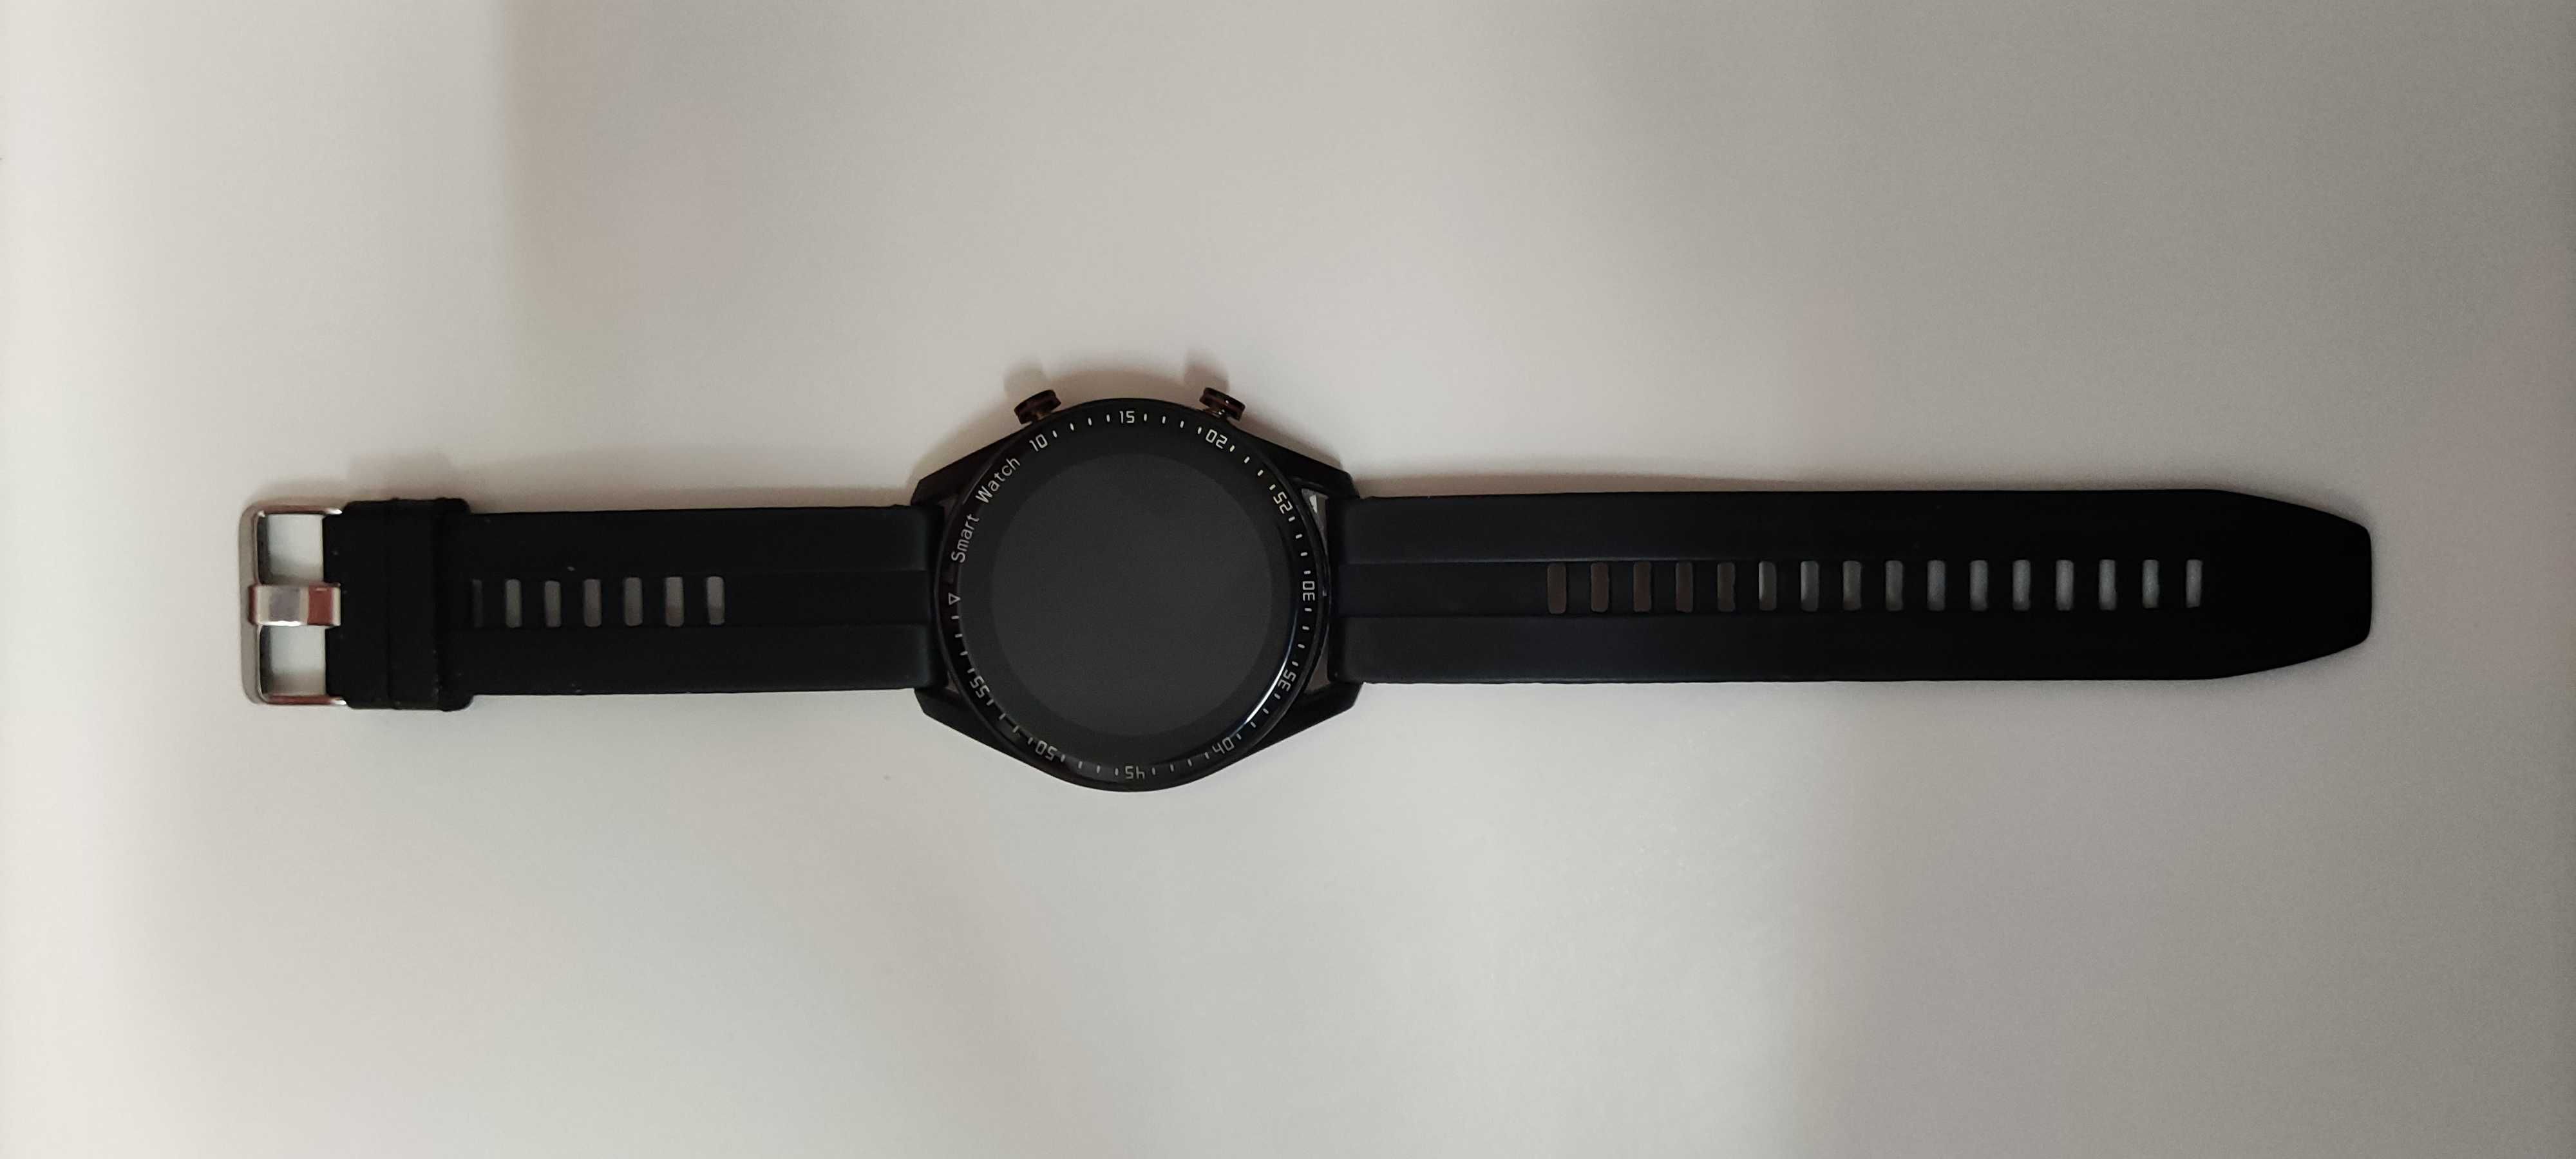 smartwatch HW 20